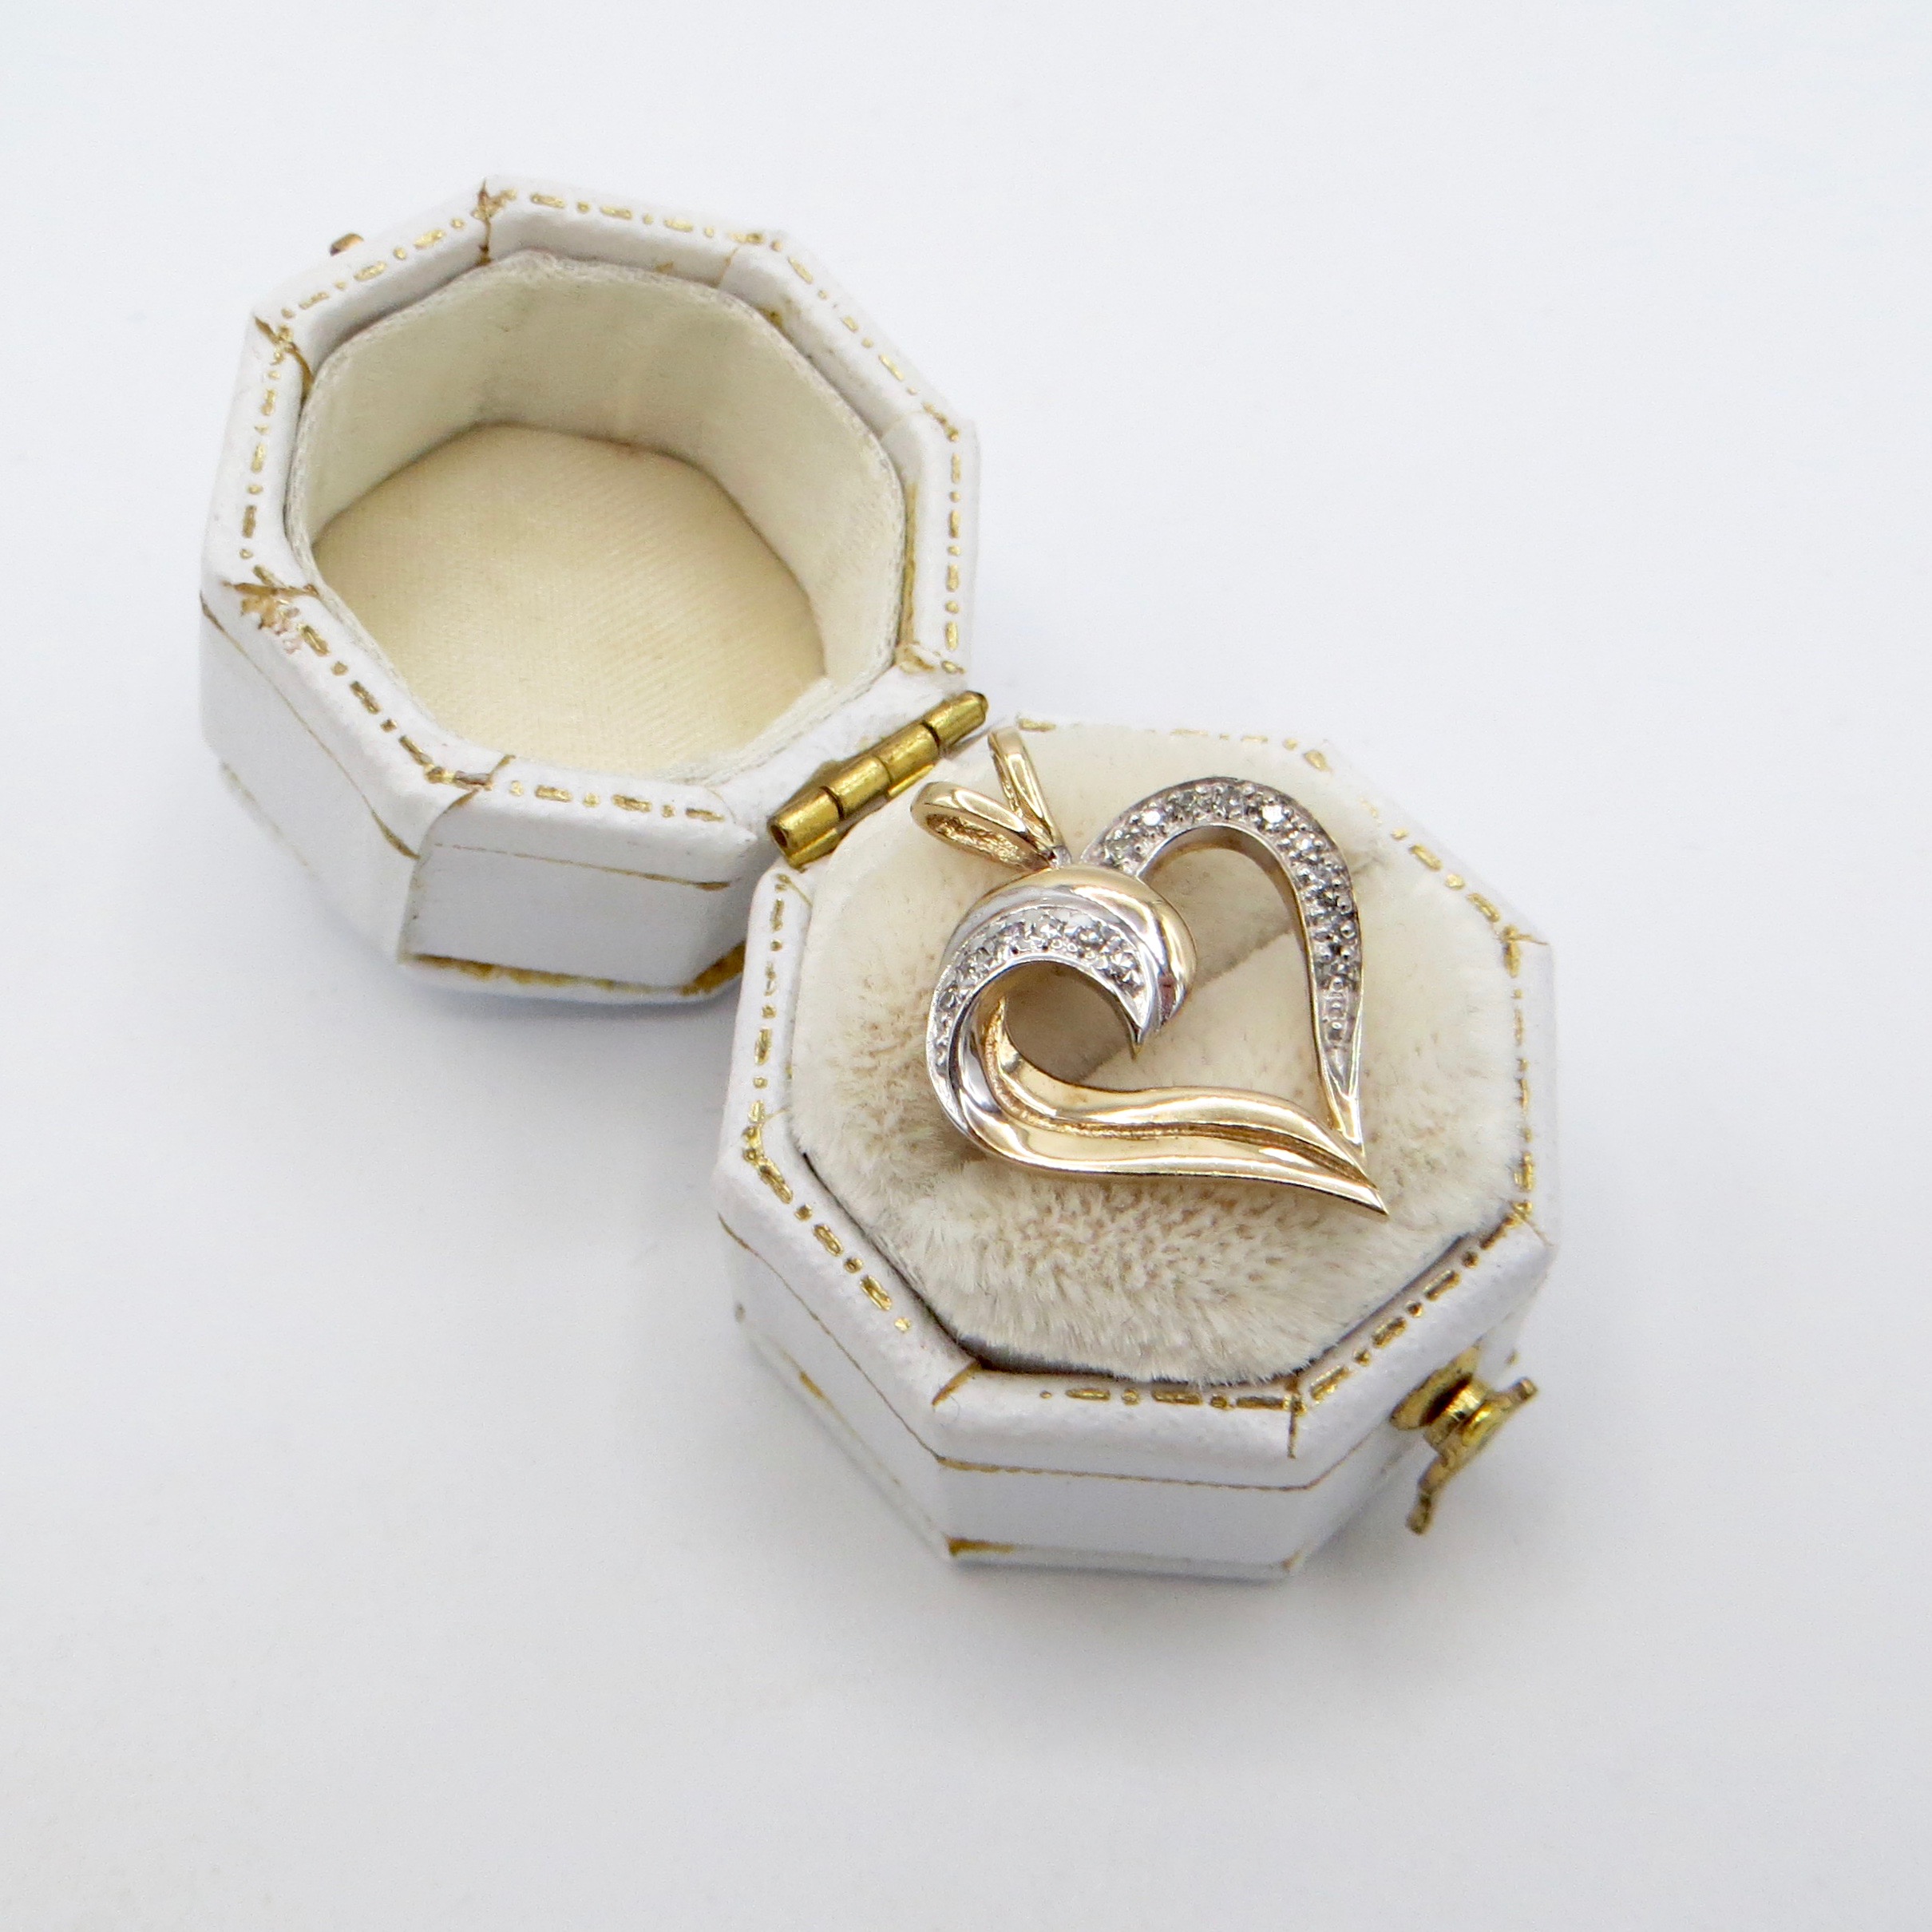 10kt Gold and Diamond Heart Pendant